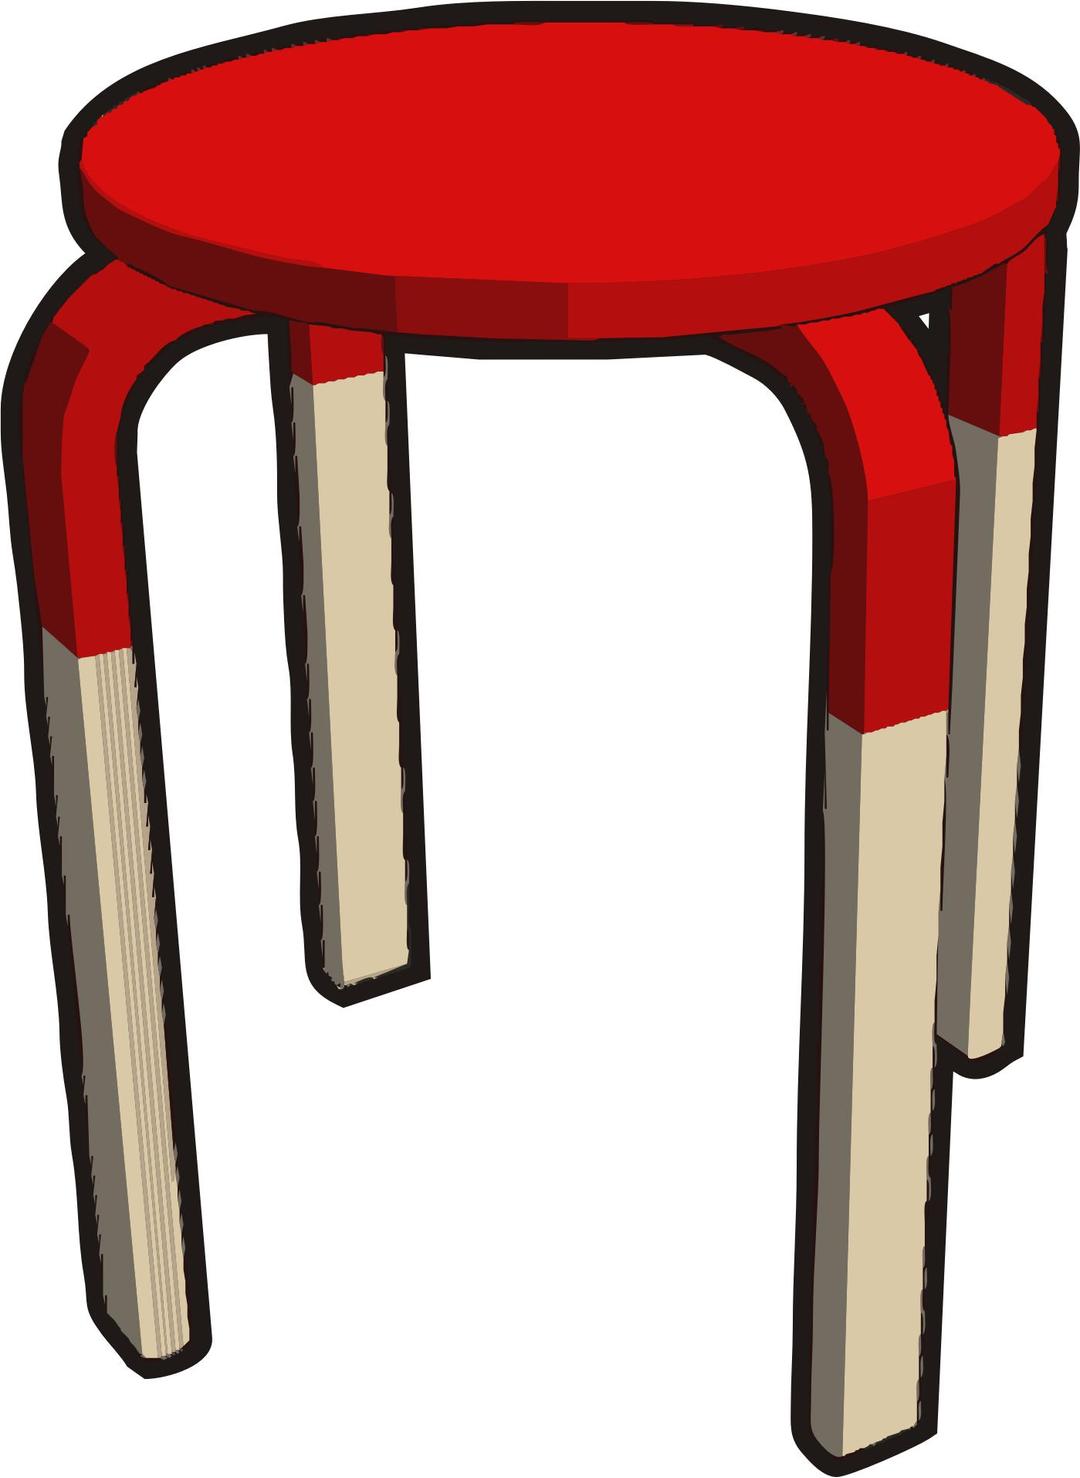 Ikea stuff - Frosta stool, half red png transparent